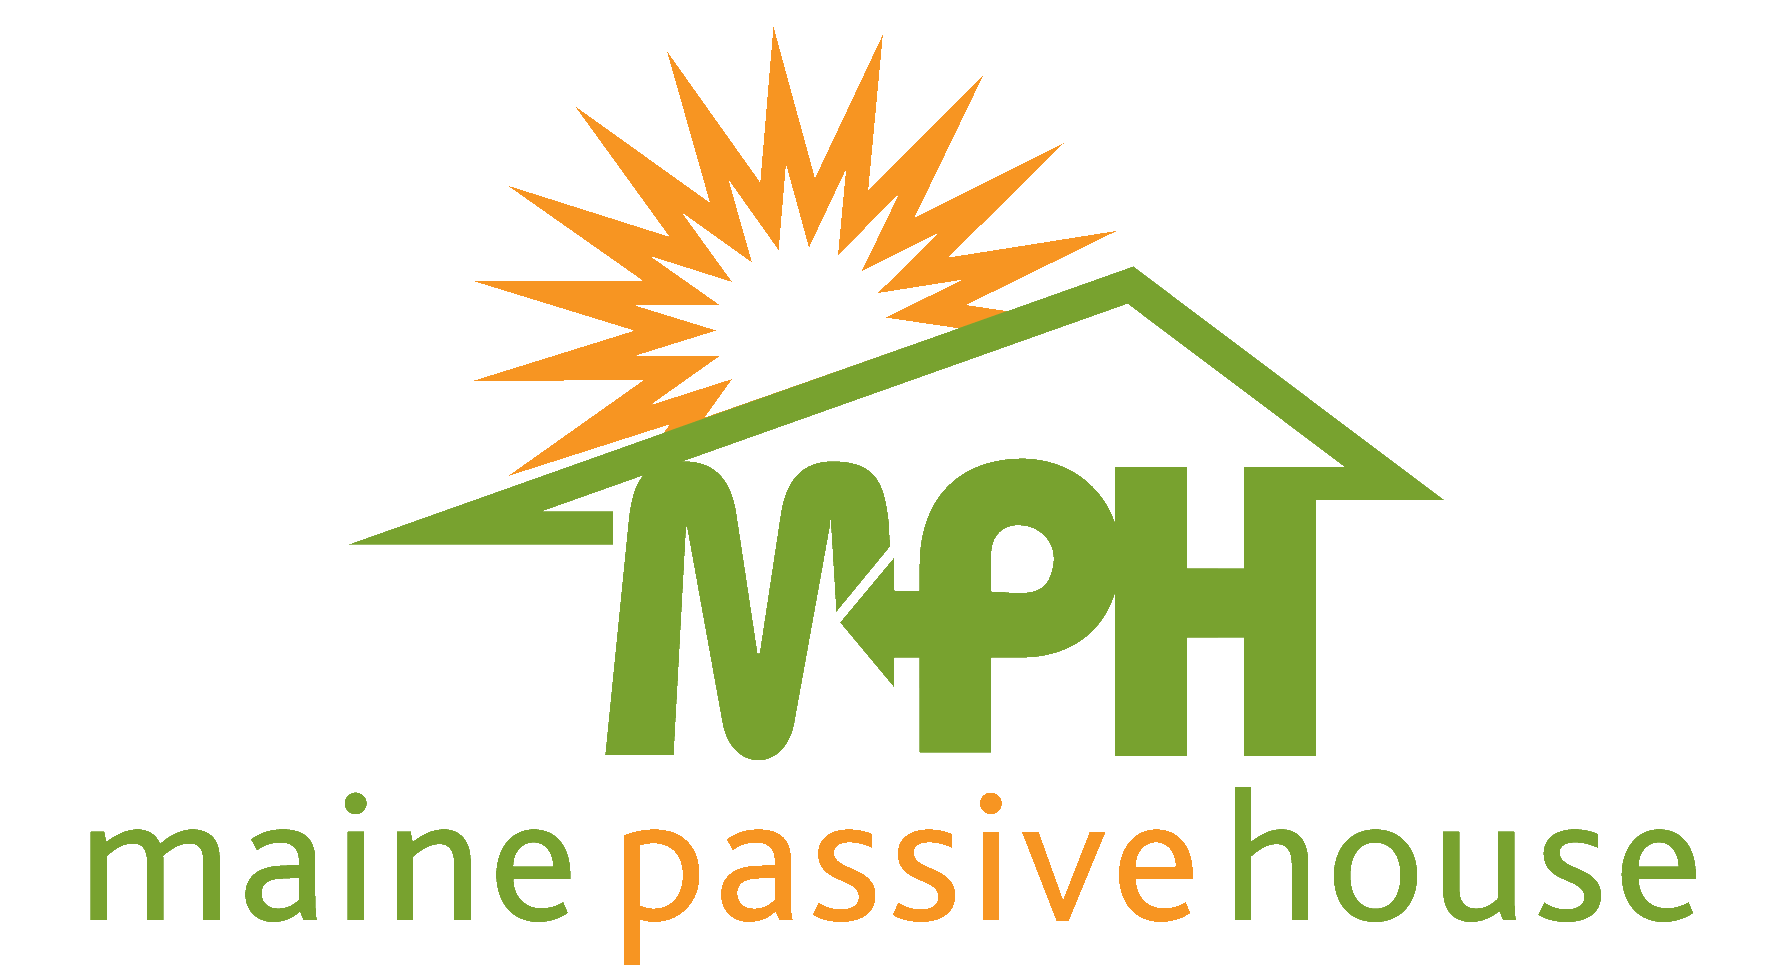 Maine passive house company logo